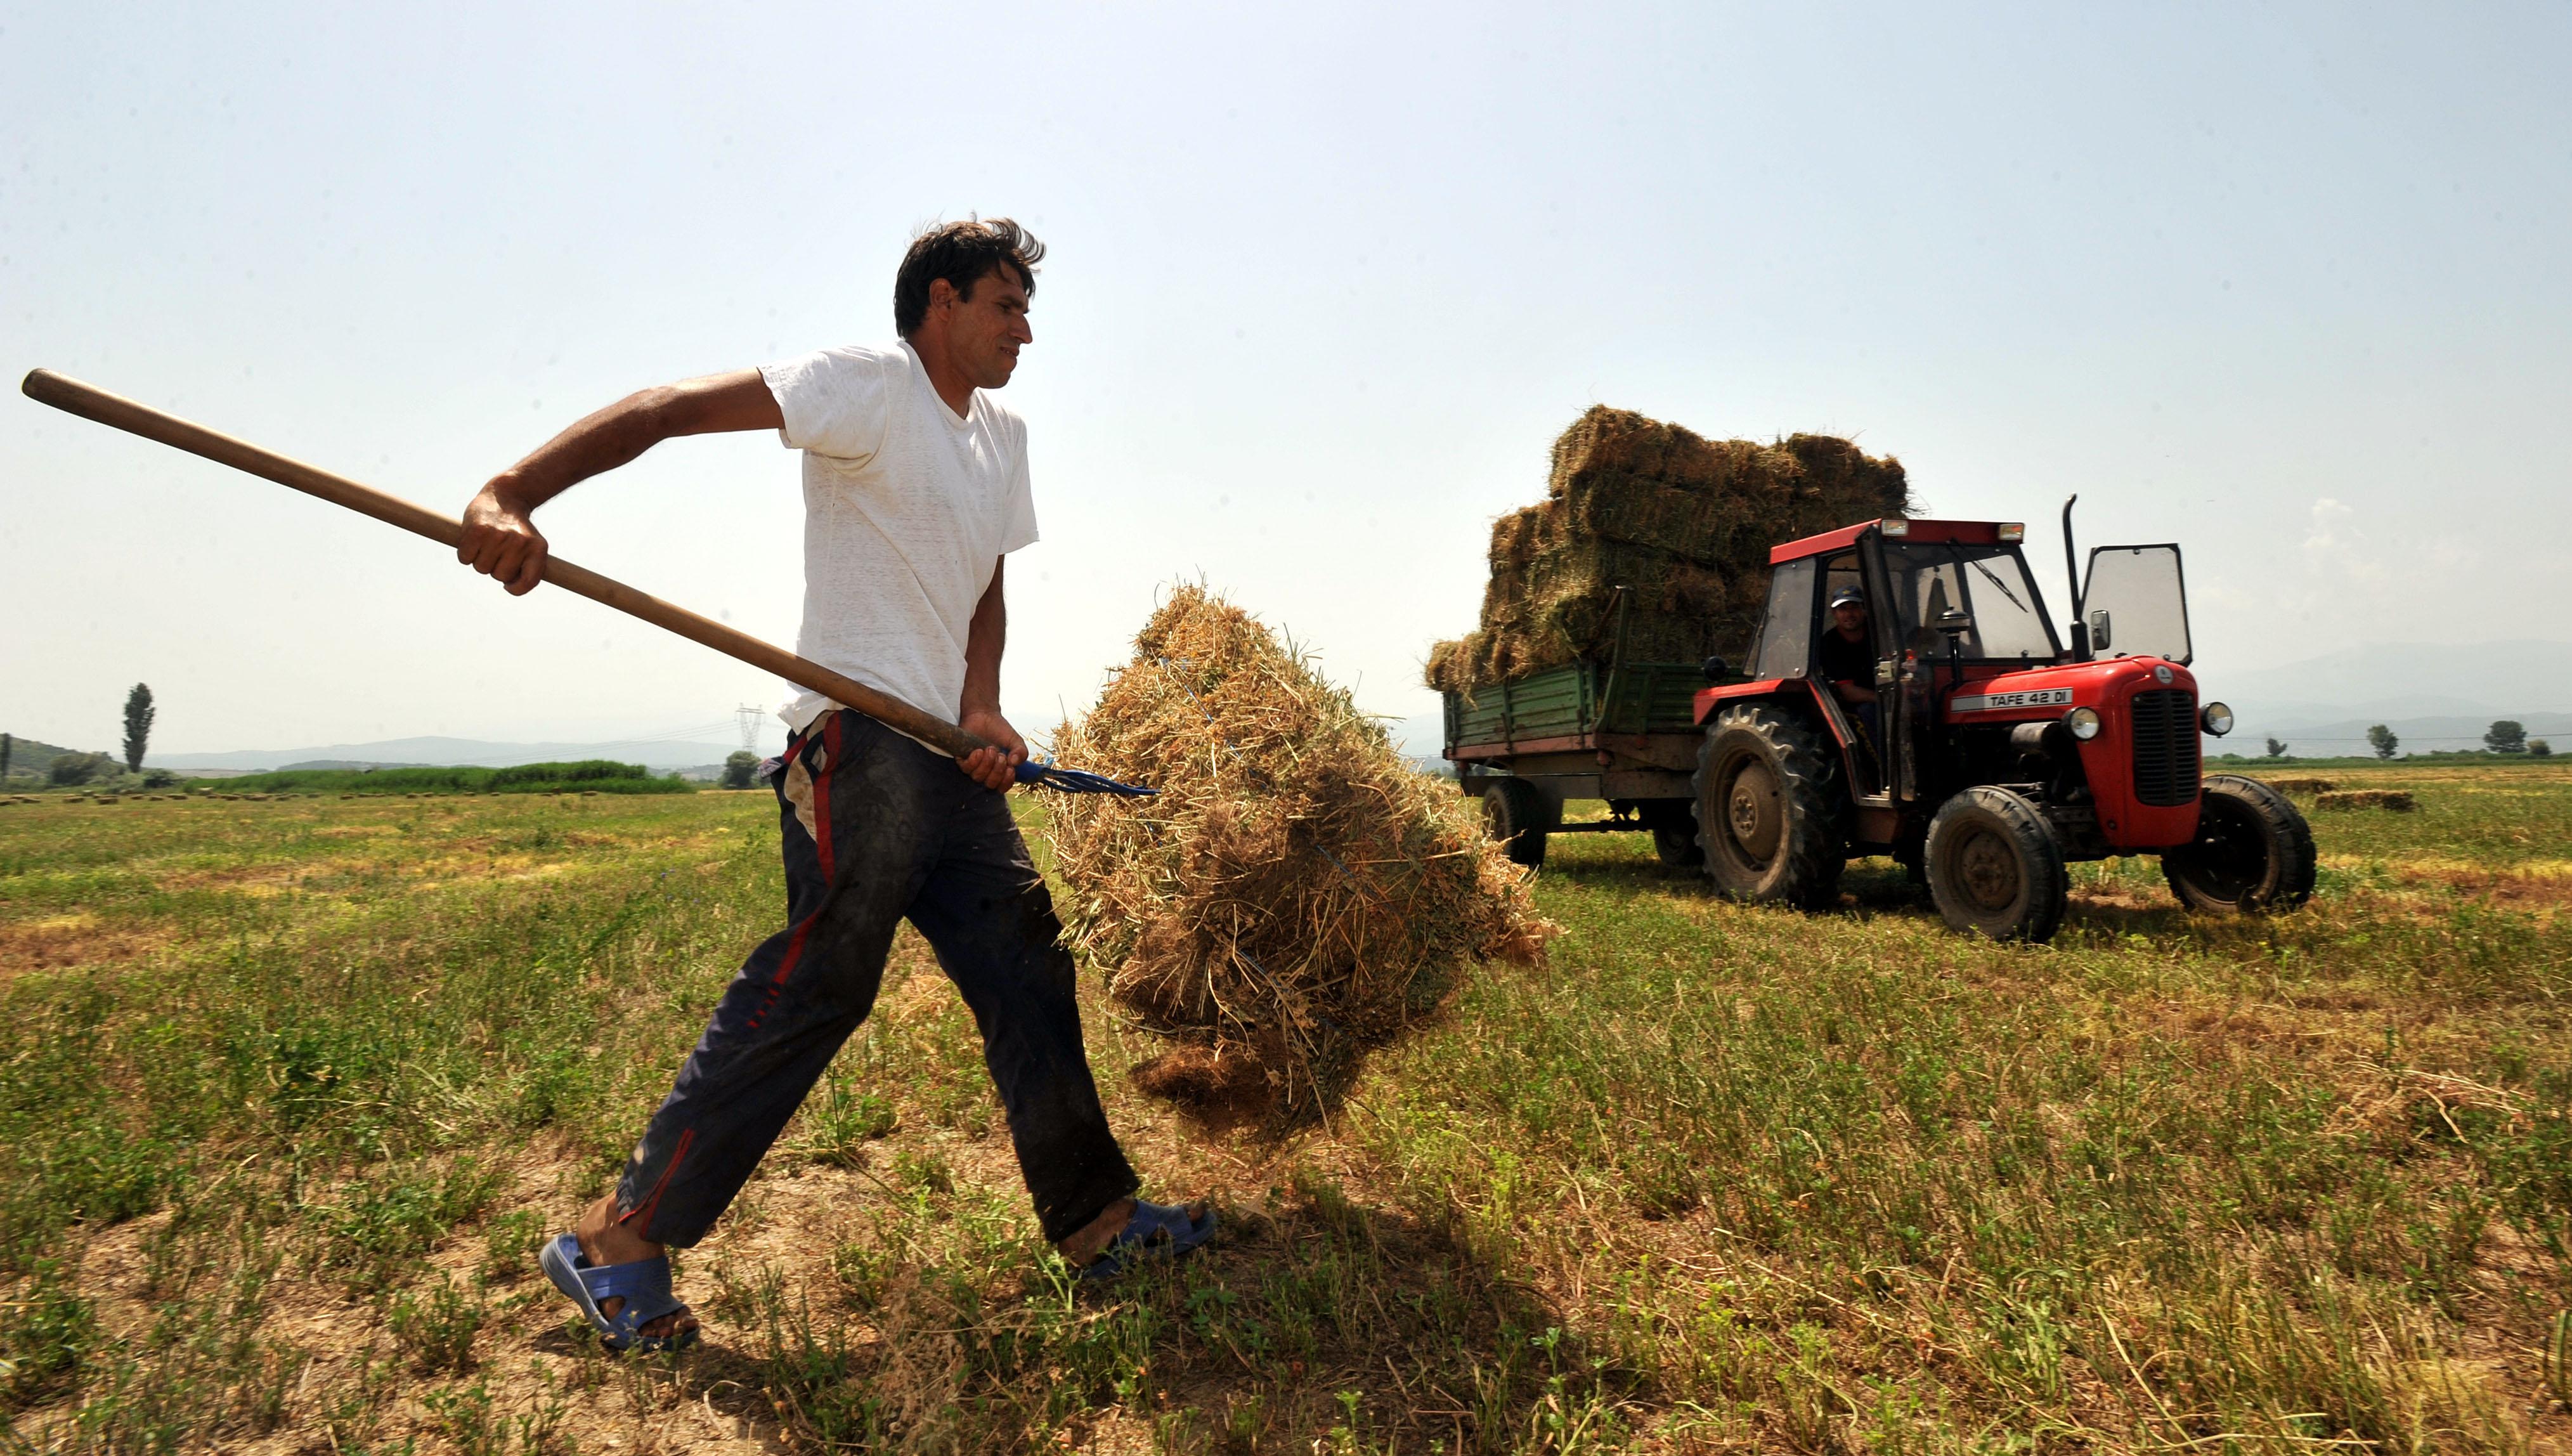 e-ΕΦΚΑ: Ποιες είναι οι 11 ηλεκτρονικές υπηρεσίες προς τους αγρότες